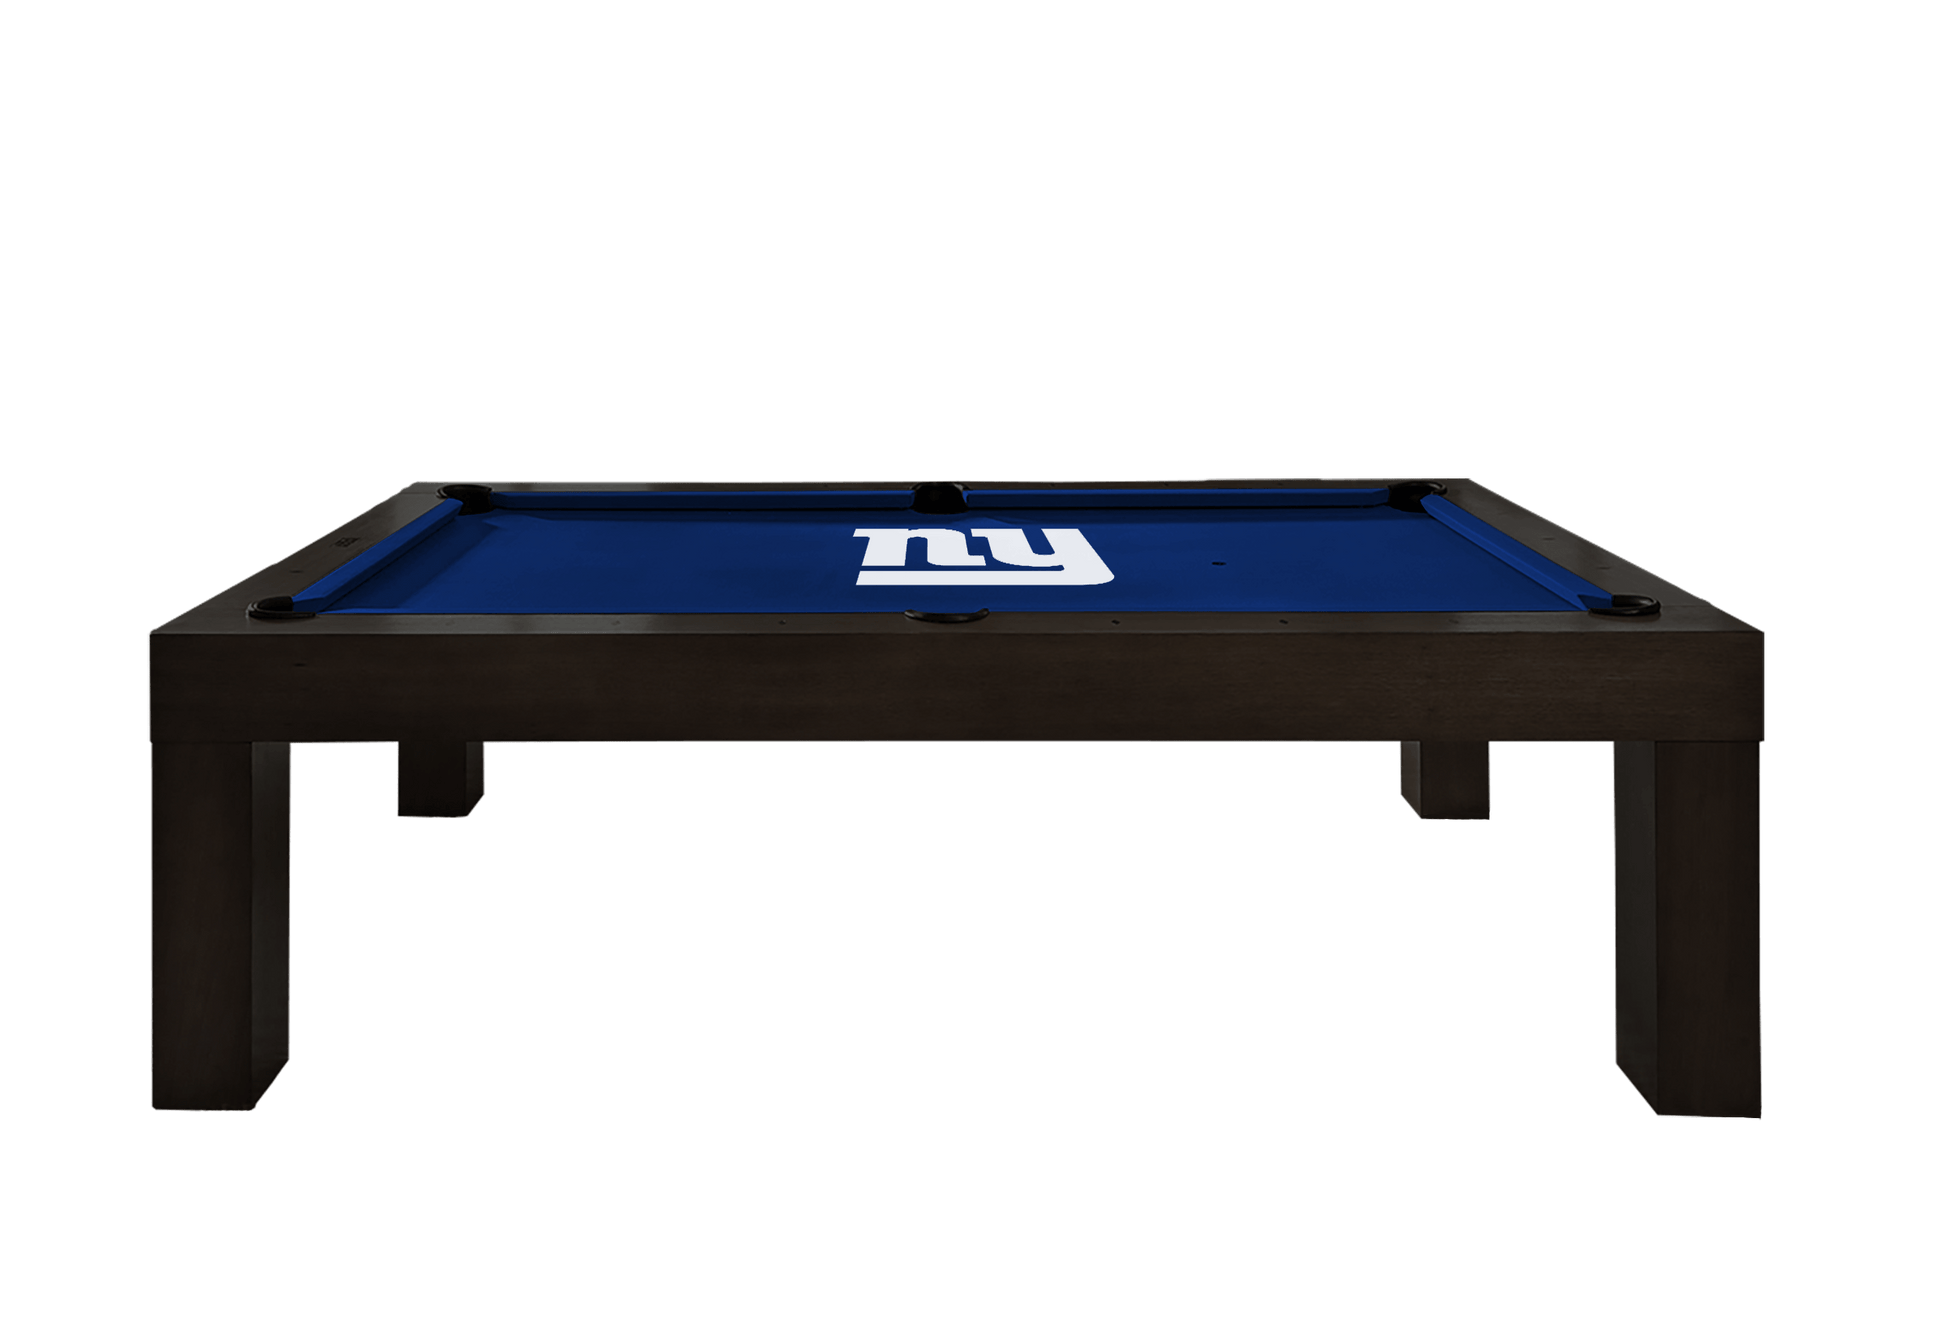 New York Giants Premium Pool Table Bundle - Black Ash Pool Bundle Home Arcade Games   